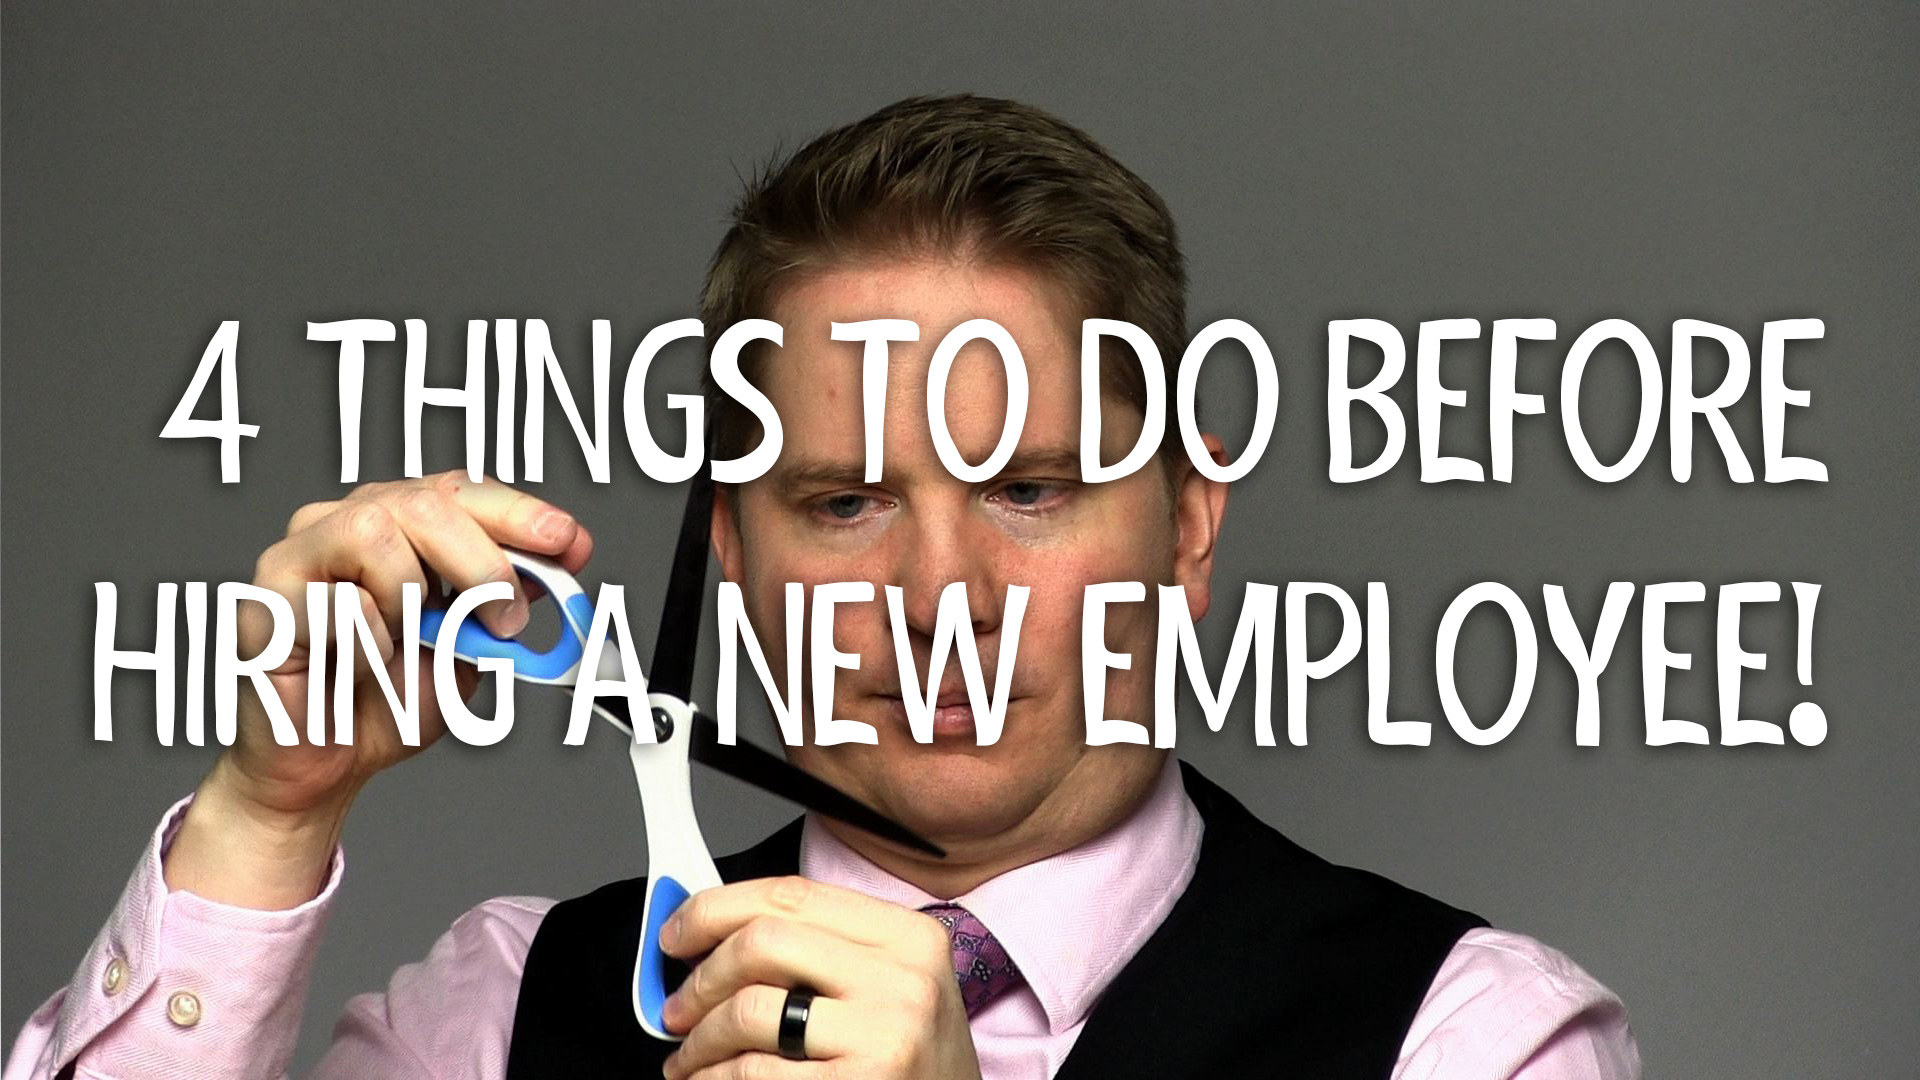 4 Things to Do Before Hiring an Employee